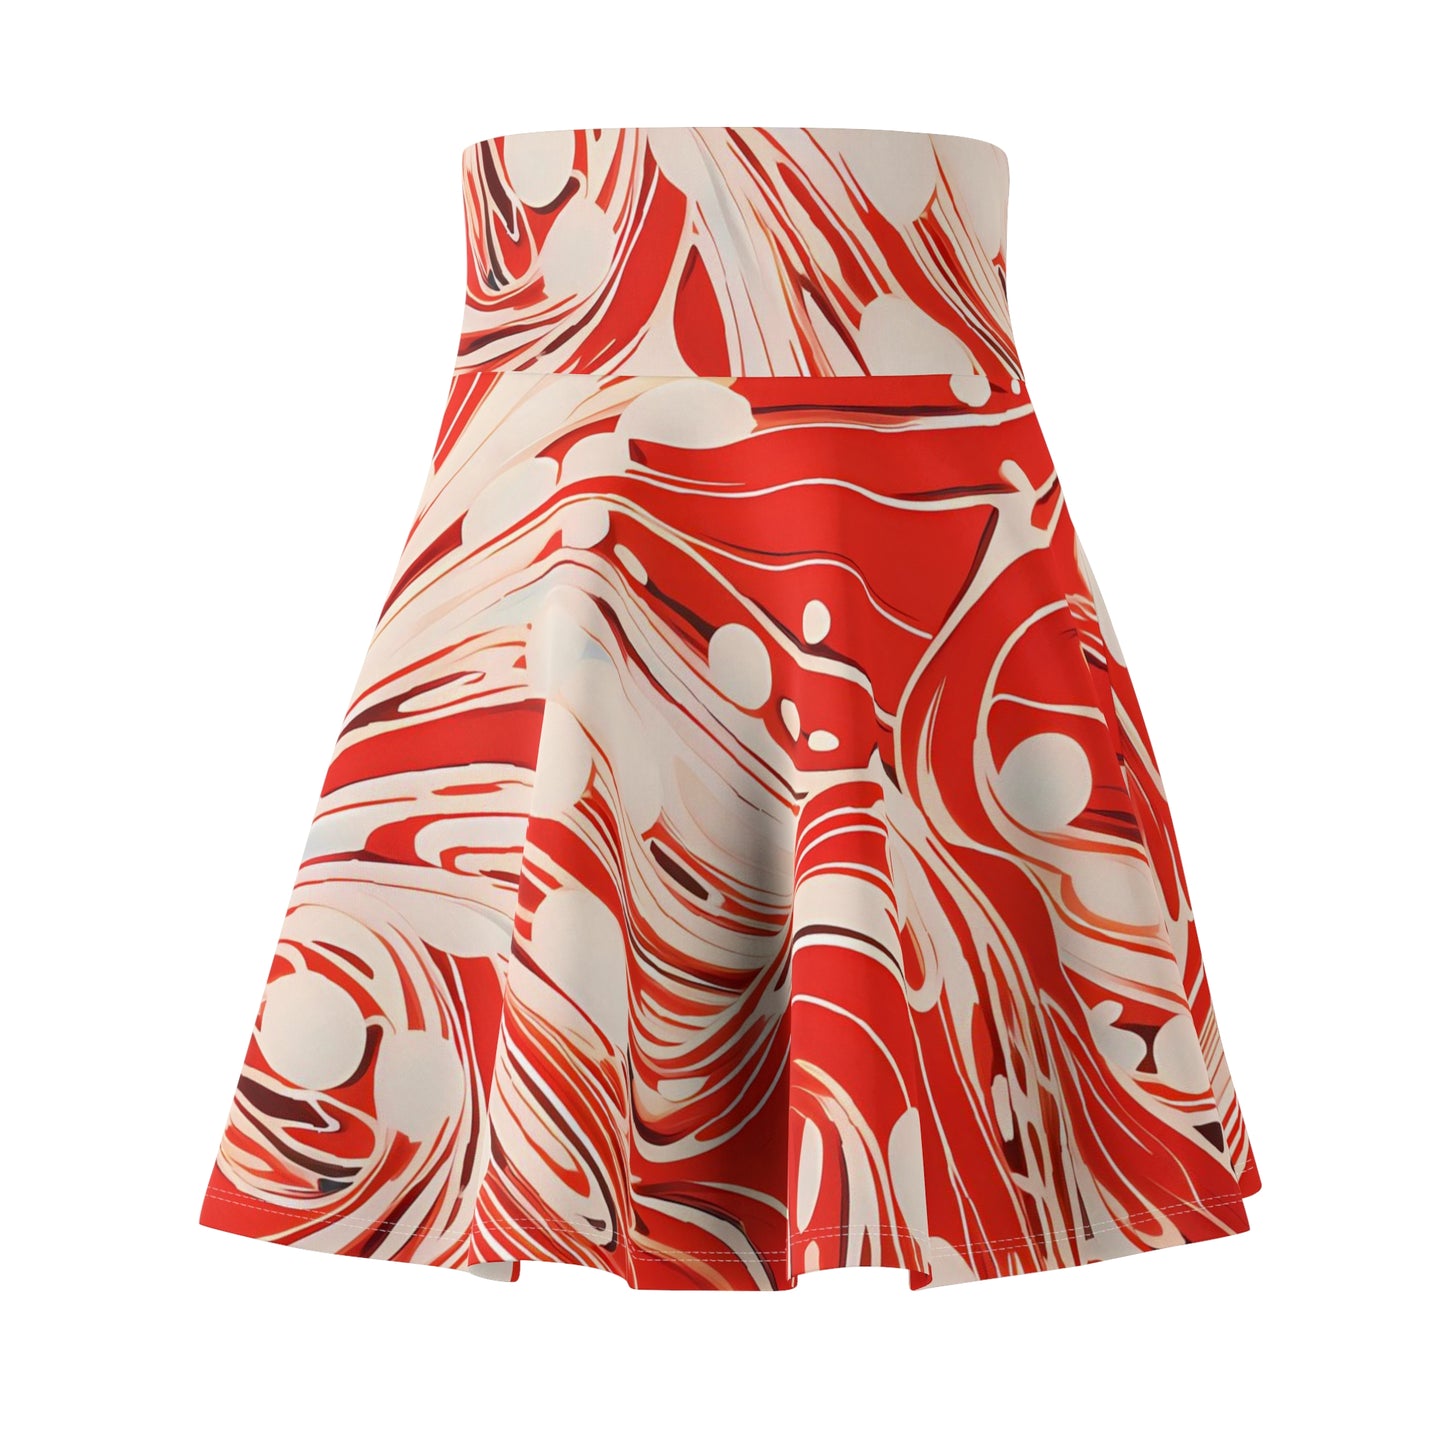 Red and White Swirls Skater Skirt